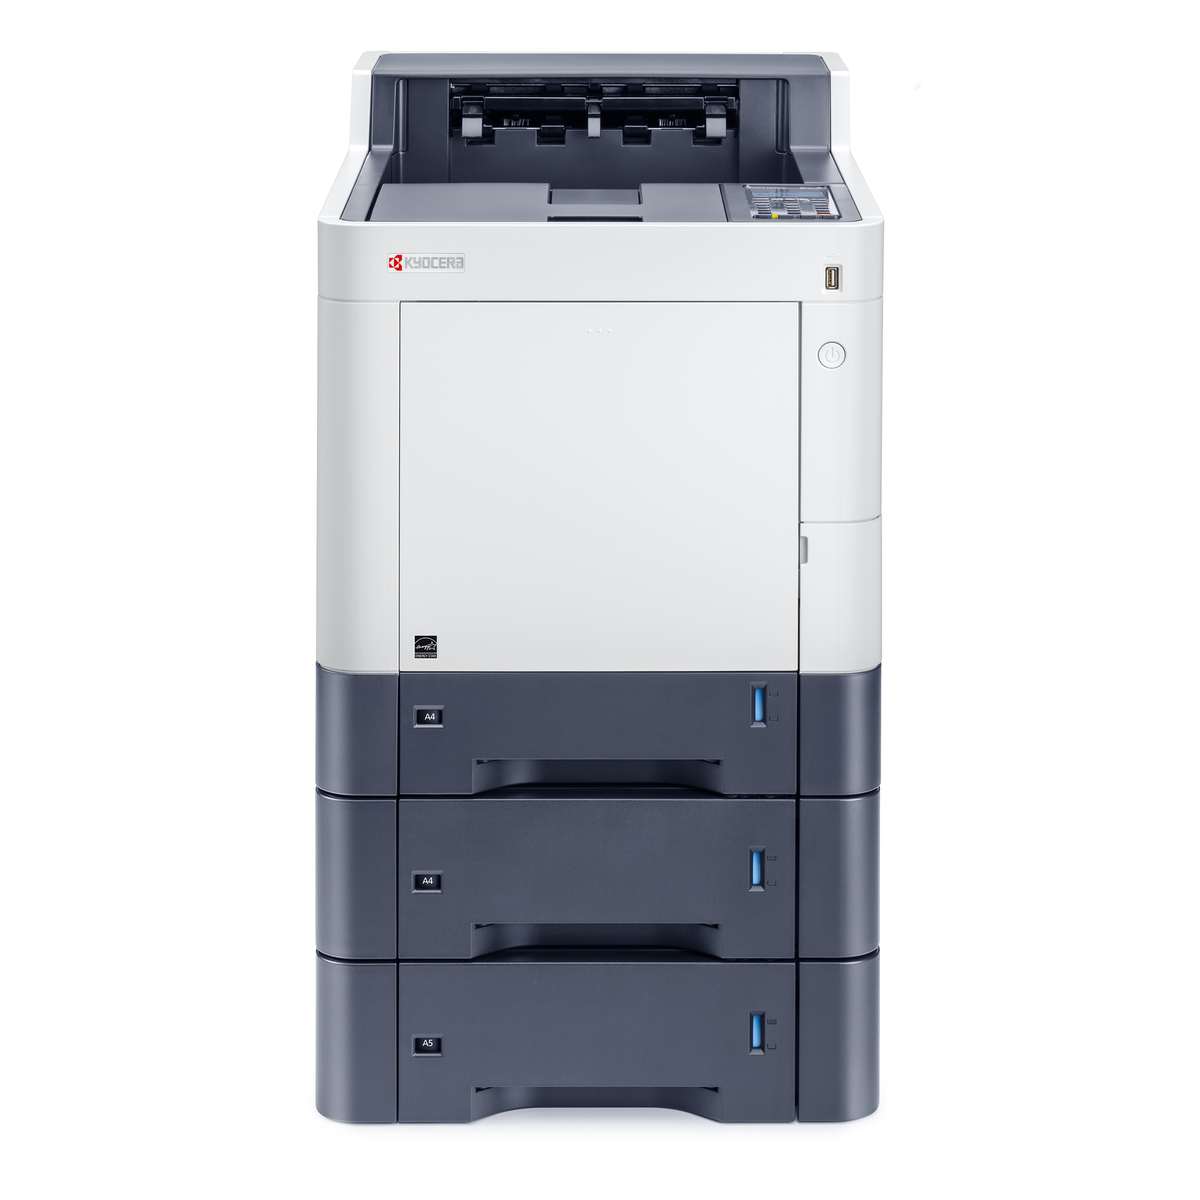 Kyocera Printers:  The Kyocera ECOSYS P6235cdn Printer